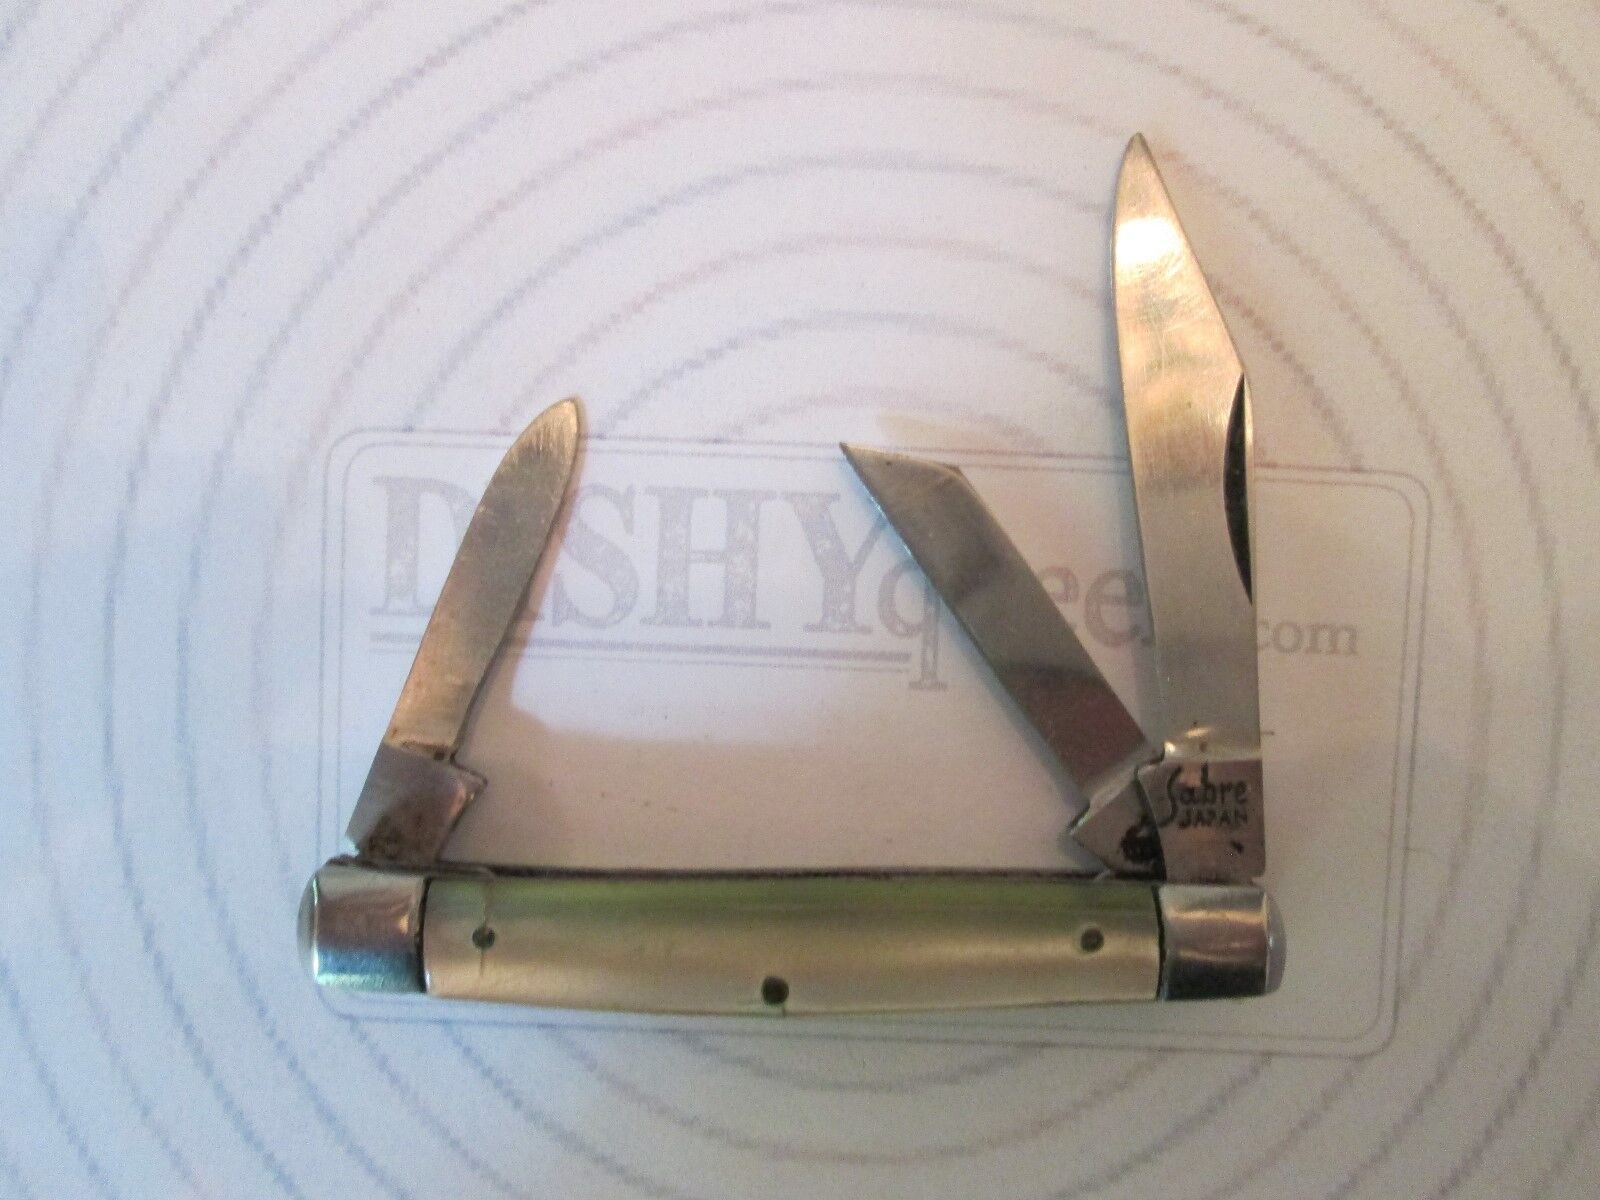 POCKET KNIFE Vintage SABRE brand: THREE 3 BLADES pearlized handle         IS391